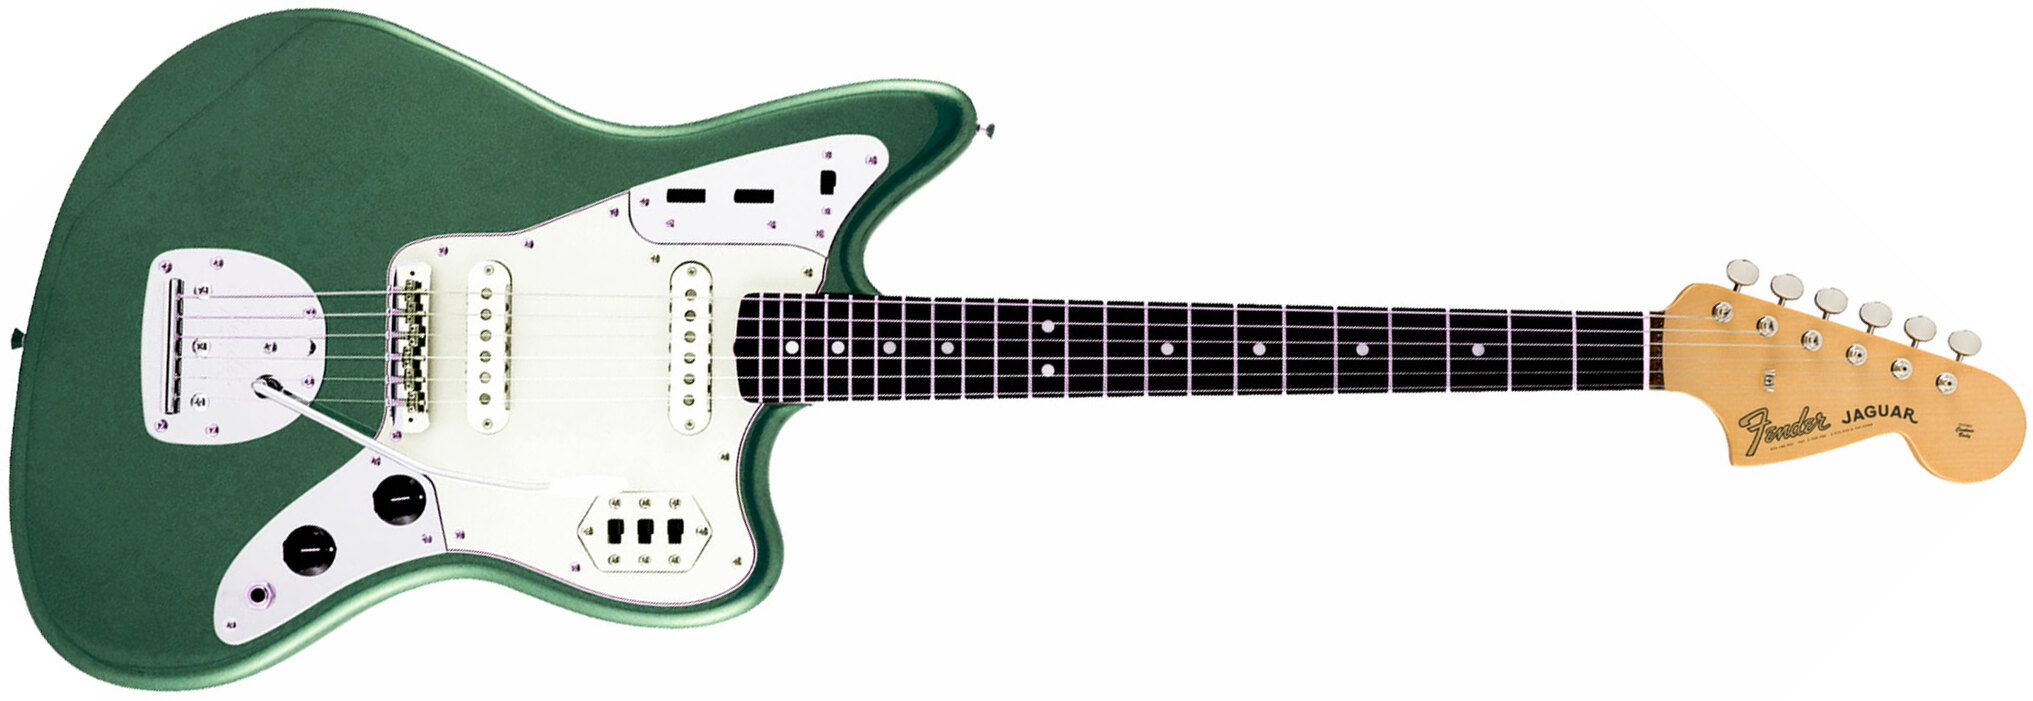 Fender Jaguar Traditional Ii 60s Jap 2s Trem Rw - Sherwood Green Metallic - Retro rock electric guitar - Main picture